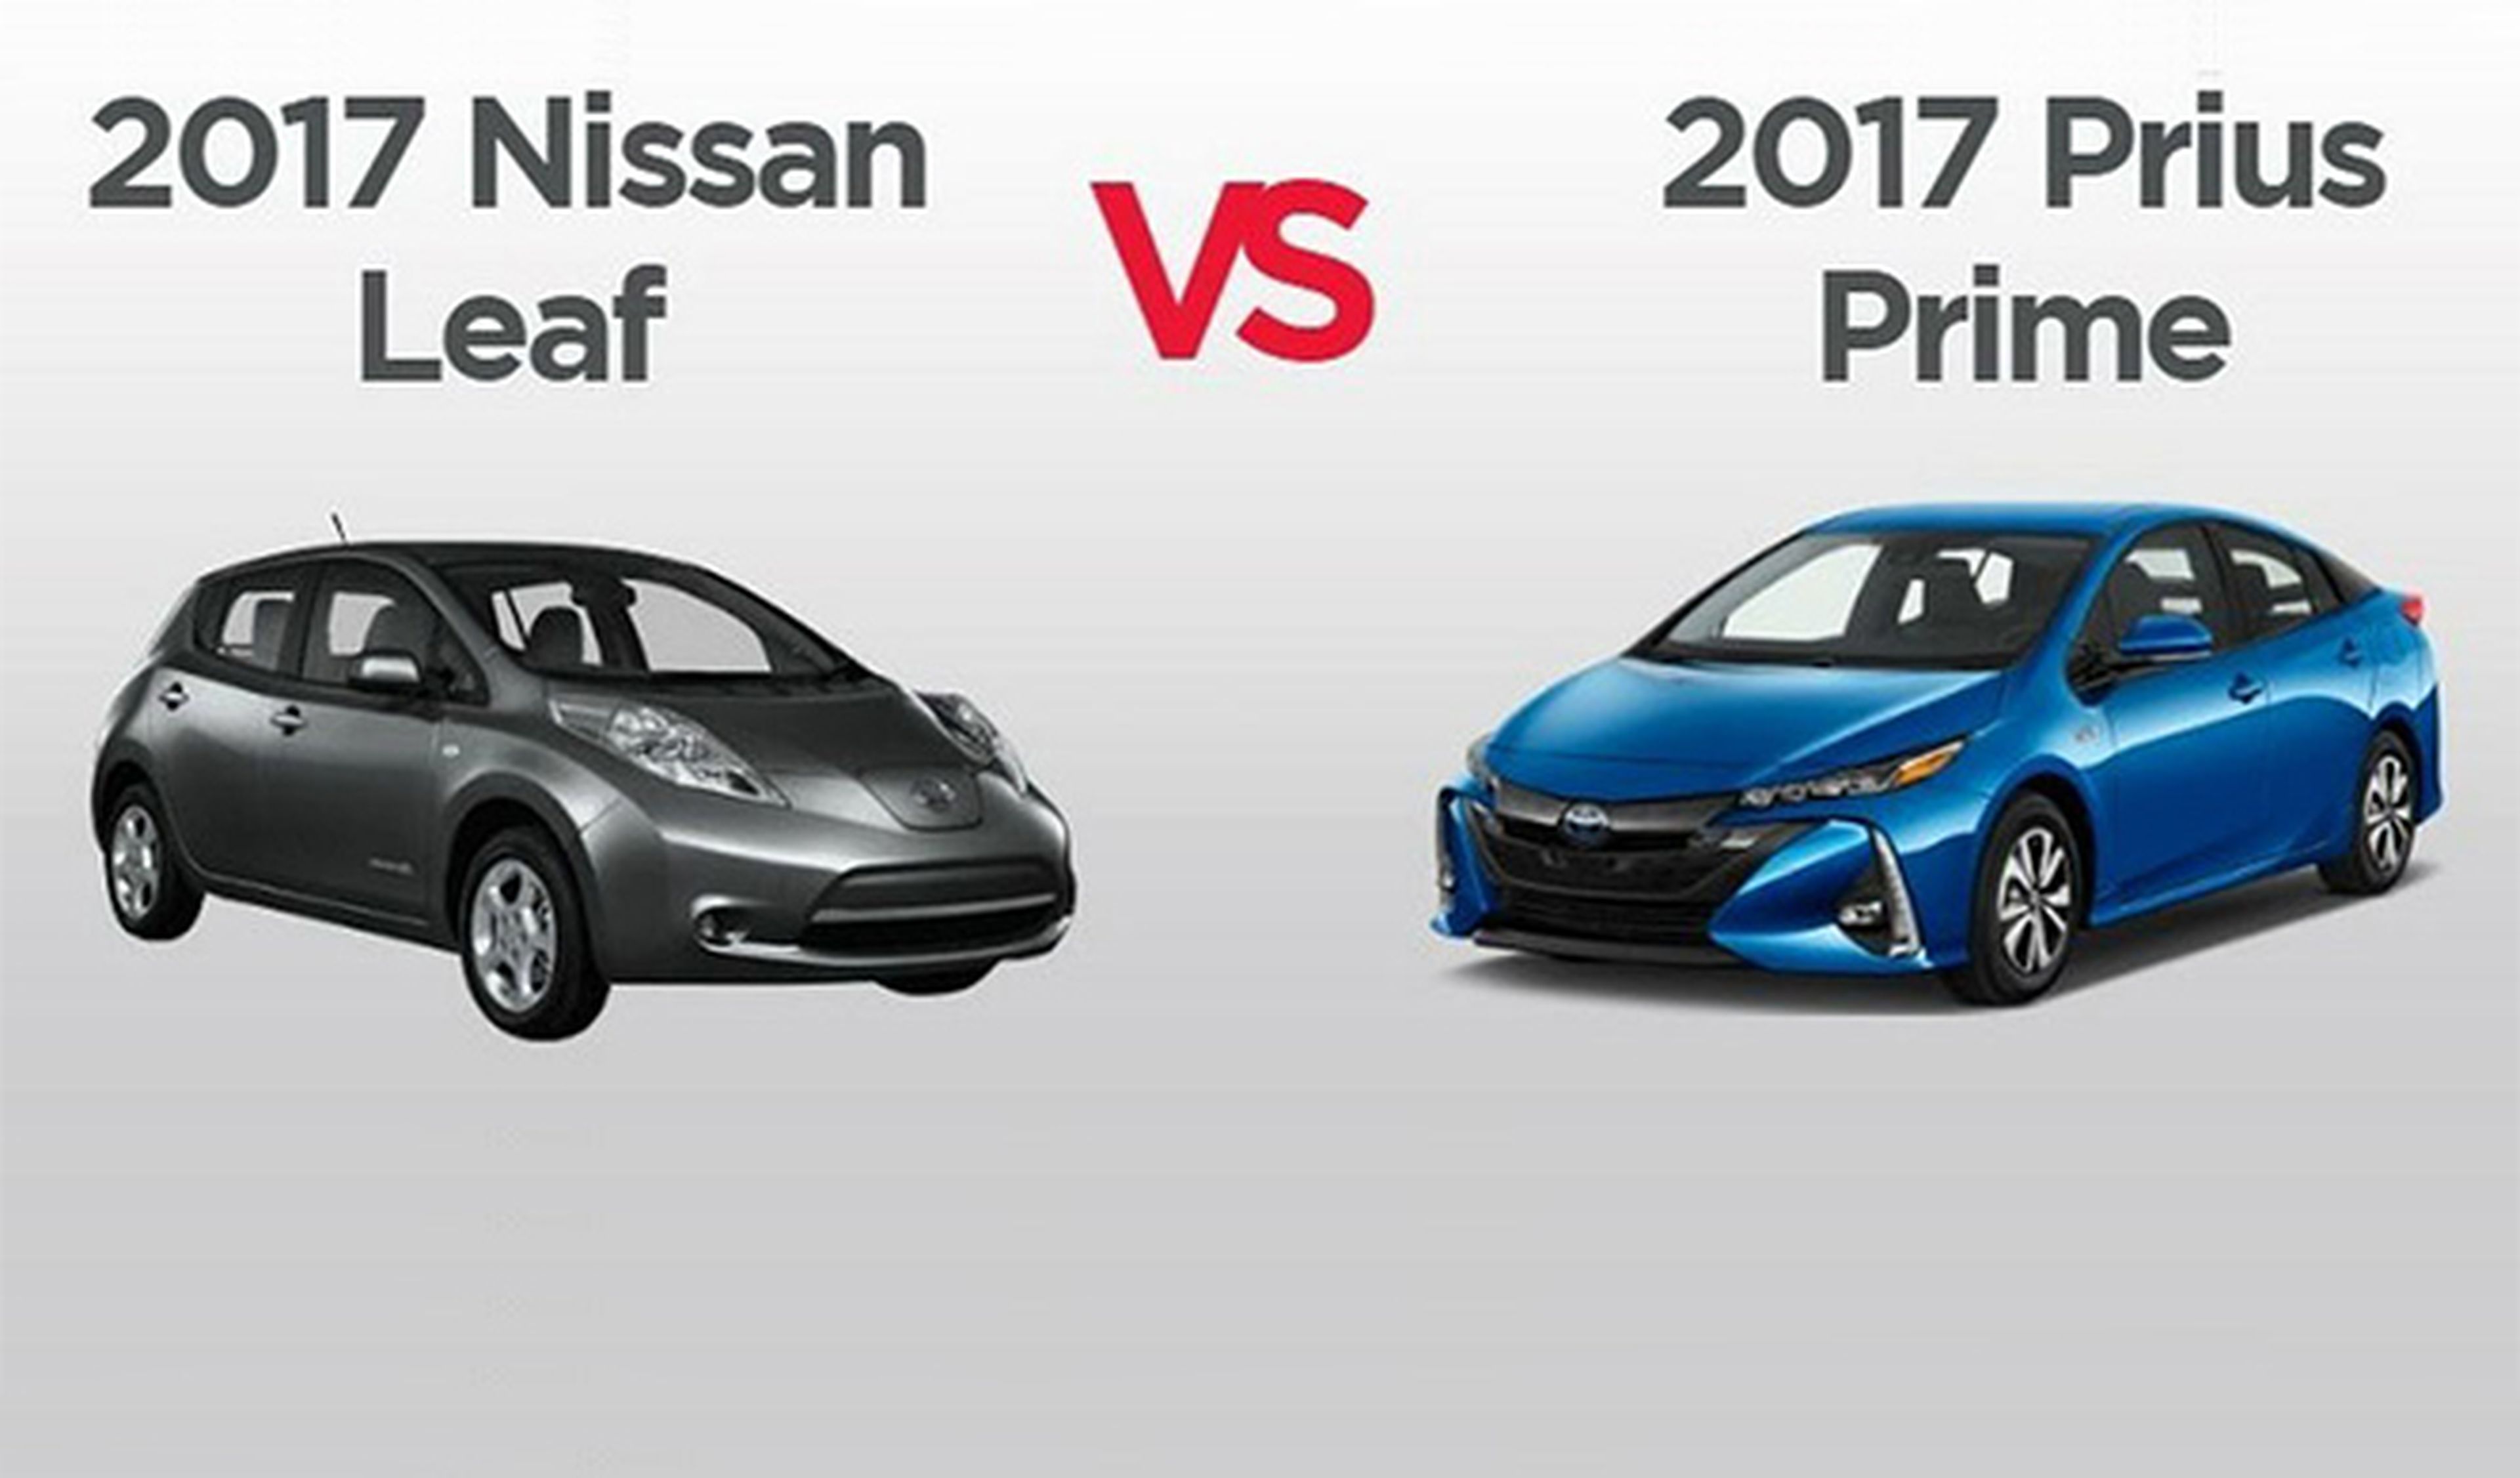 Comparativa técnica: Nissan Leaf vs Toyota Prius Prime